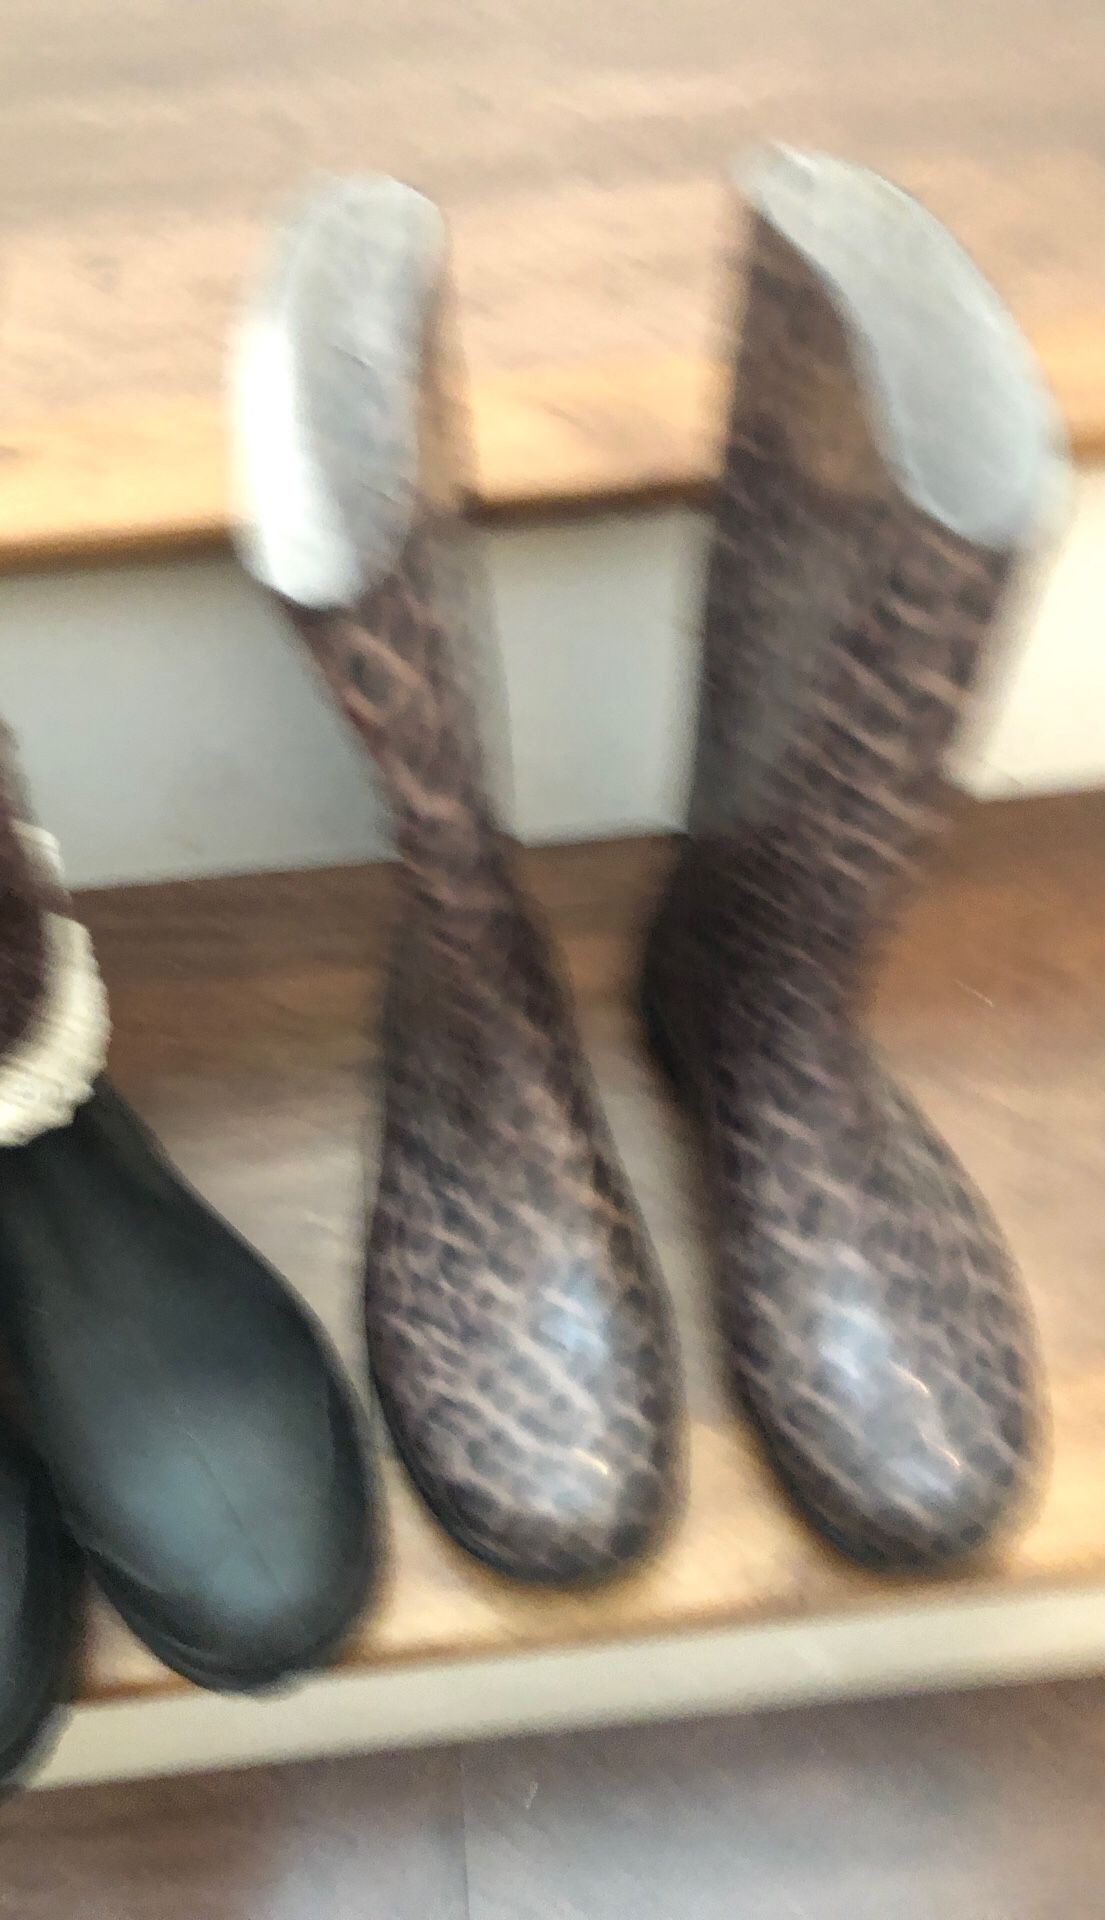 Rain boots women’s size 7